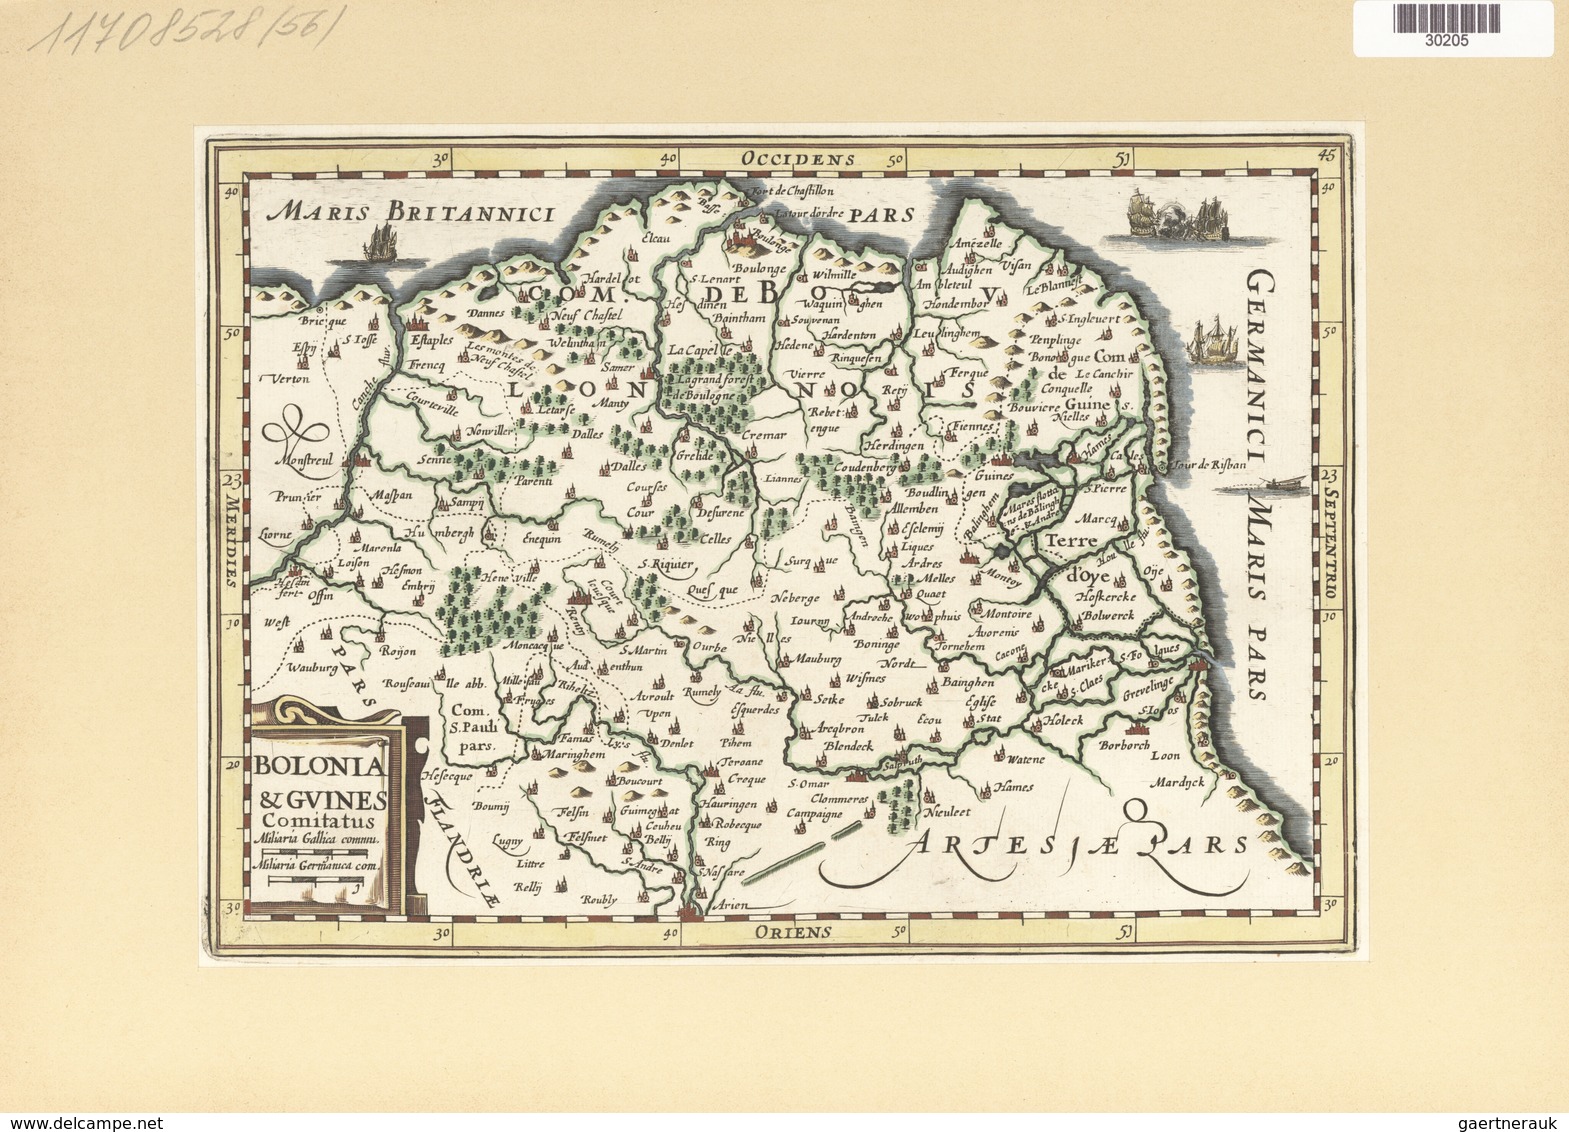 Landkarten Und Stiche: 1734. Bolonia & Guines Comitatus, Published In The Mercator Atlas Minor 1734 - Géographie